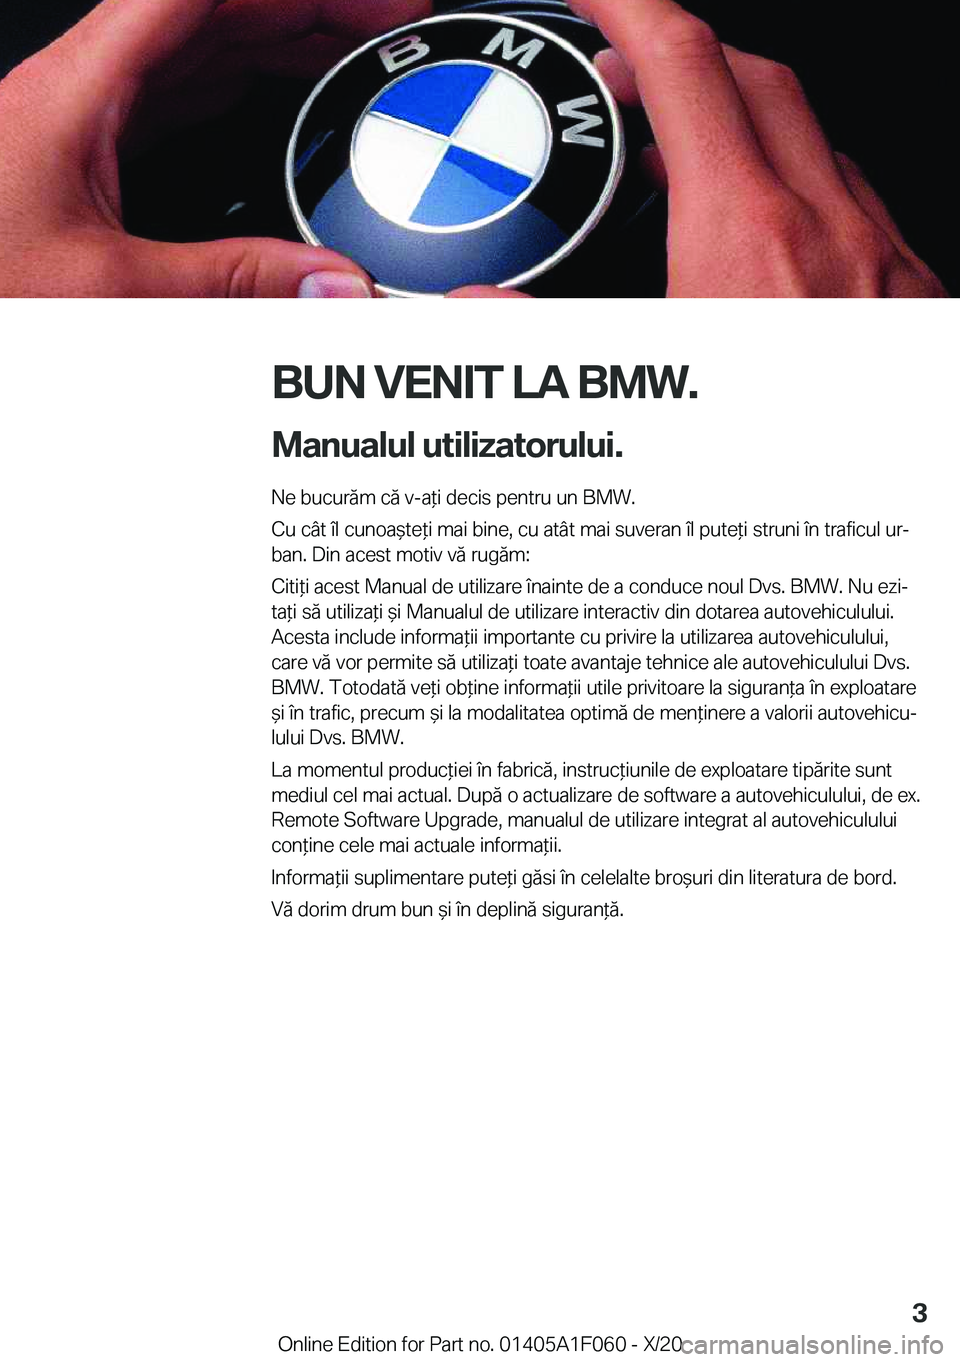 BMW X7 2021  Ghiduri De Utilizare (in Romanian) �B�U�N��V�E�N�I�T��L�A��B�M�W�.�M�a�n�u�a�l�u�l��u�t�i�l�i�z�a�t�o�r�u�l�u�i�.
�N�e��b�u�c�u�r�ă�m��c�ă��v�-�a*�i��d�e�c�i�s��p�e�n�t�r�u��u�n��B�M�W�.
�C�u��c�